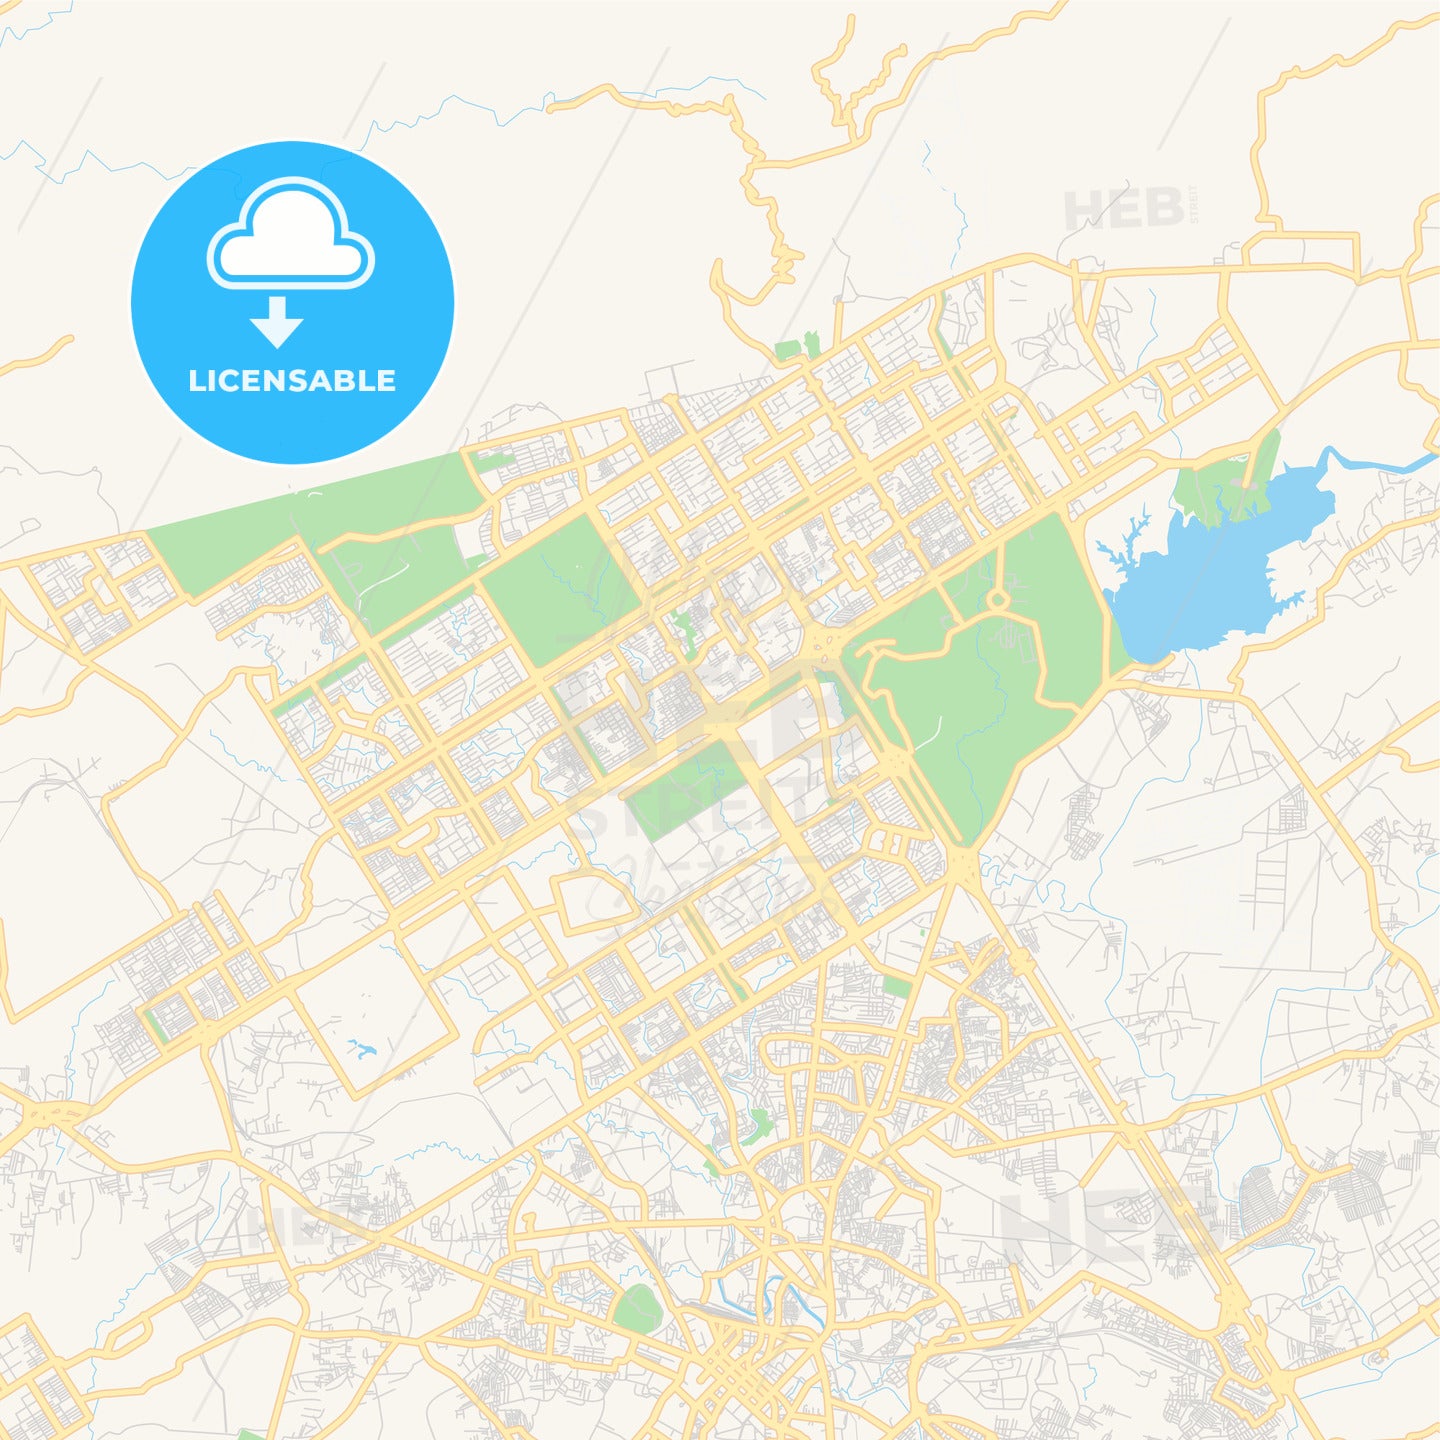 Printable street map of Islamabad, Pakistan